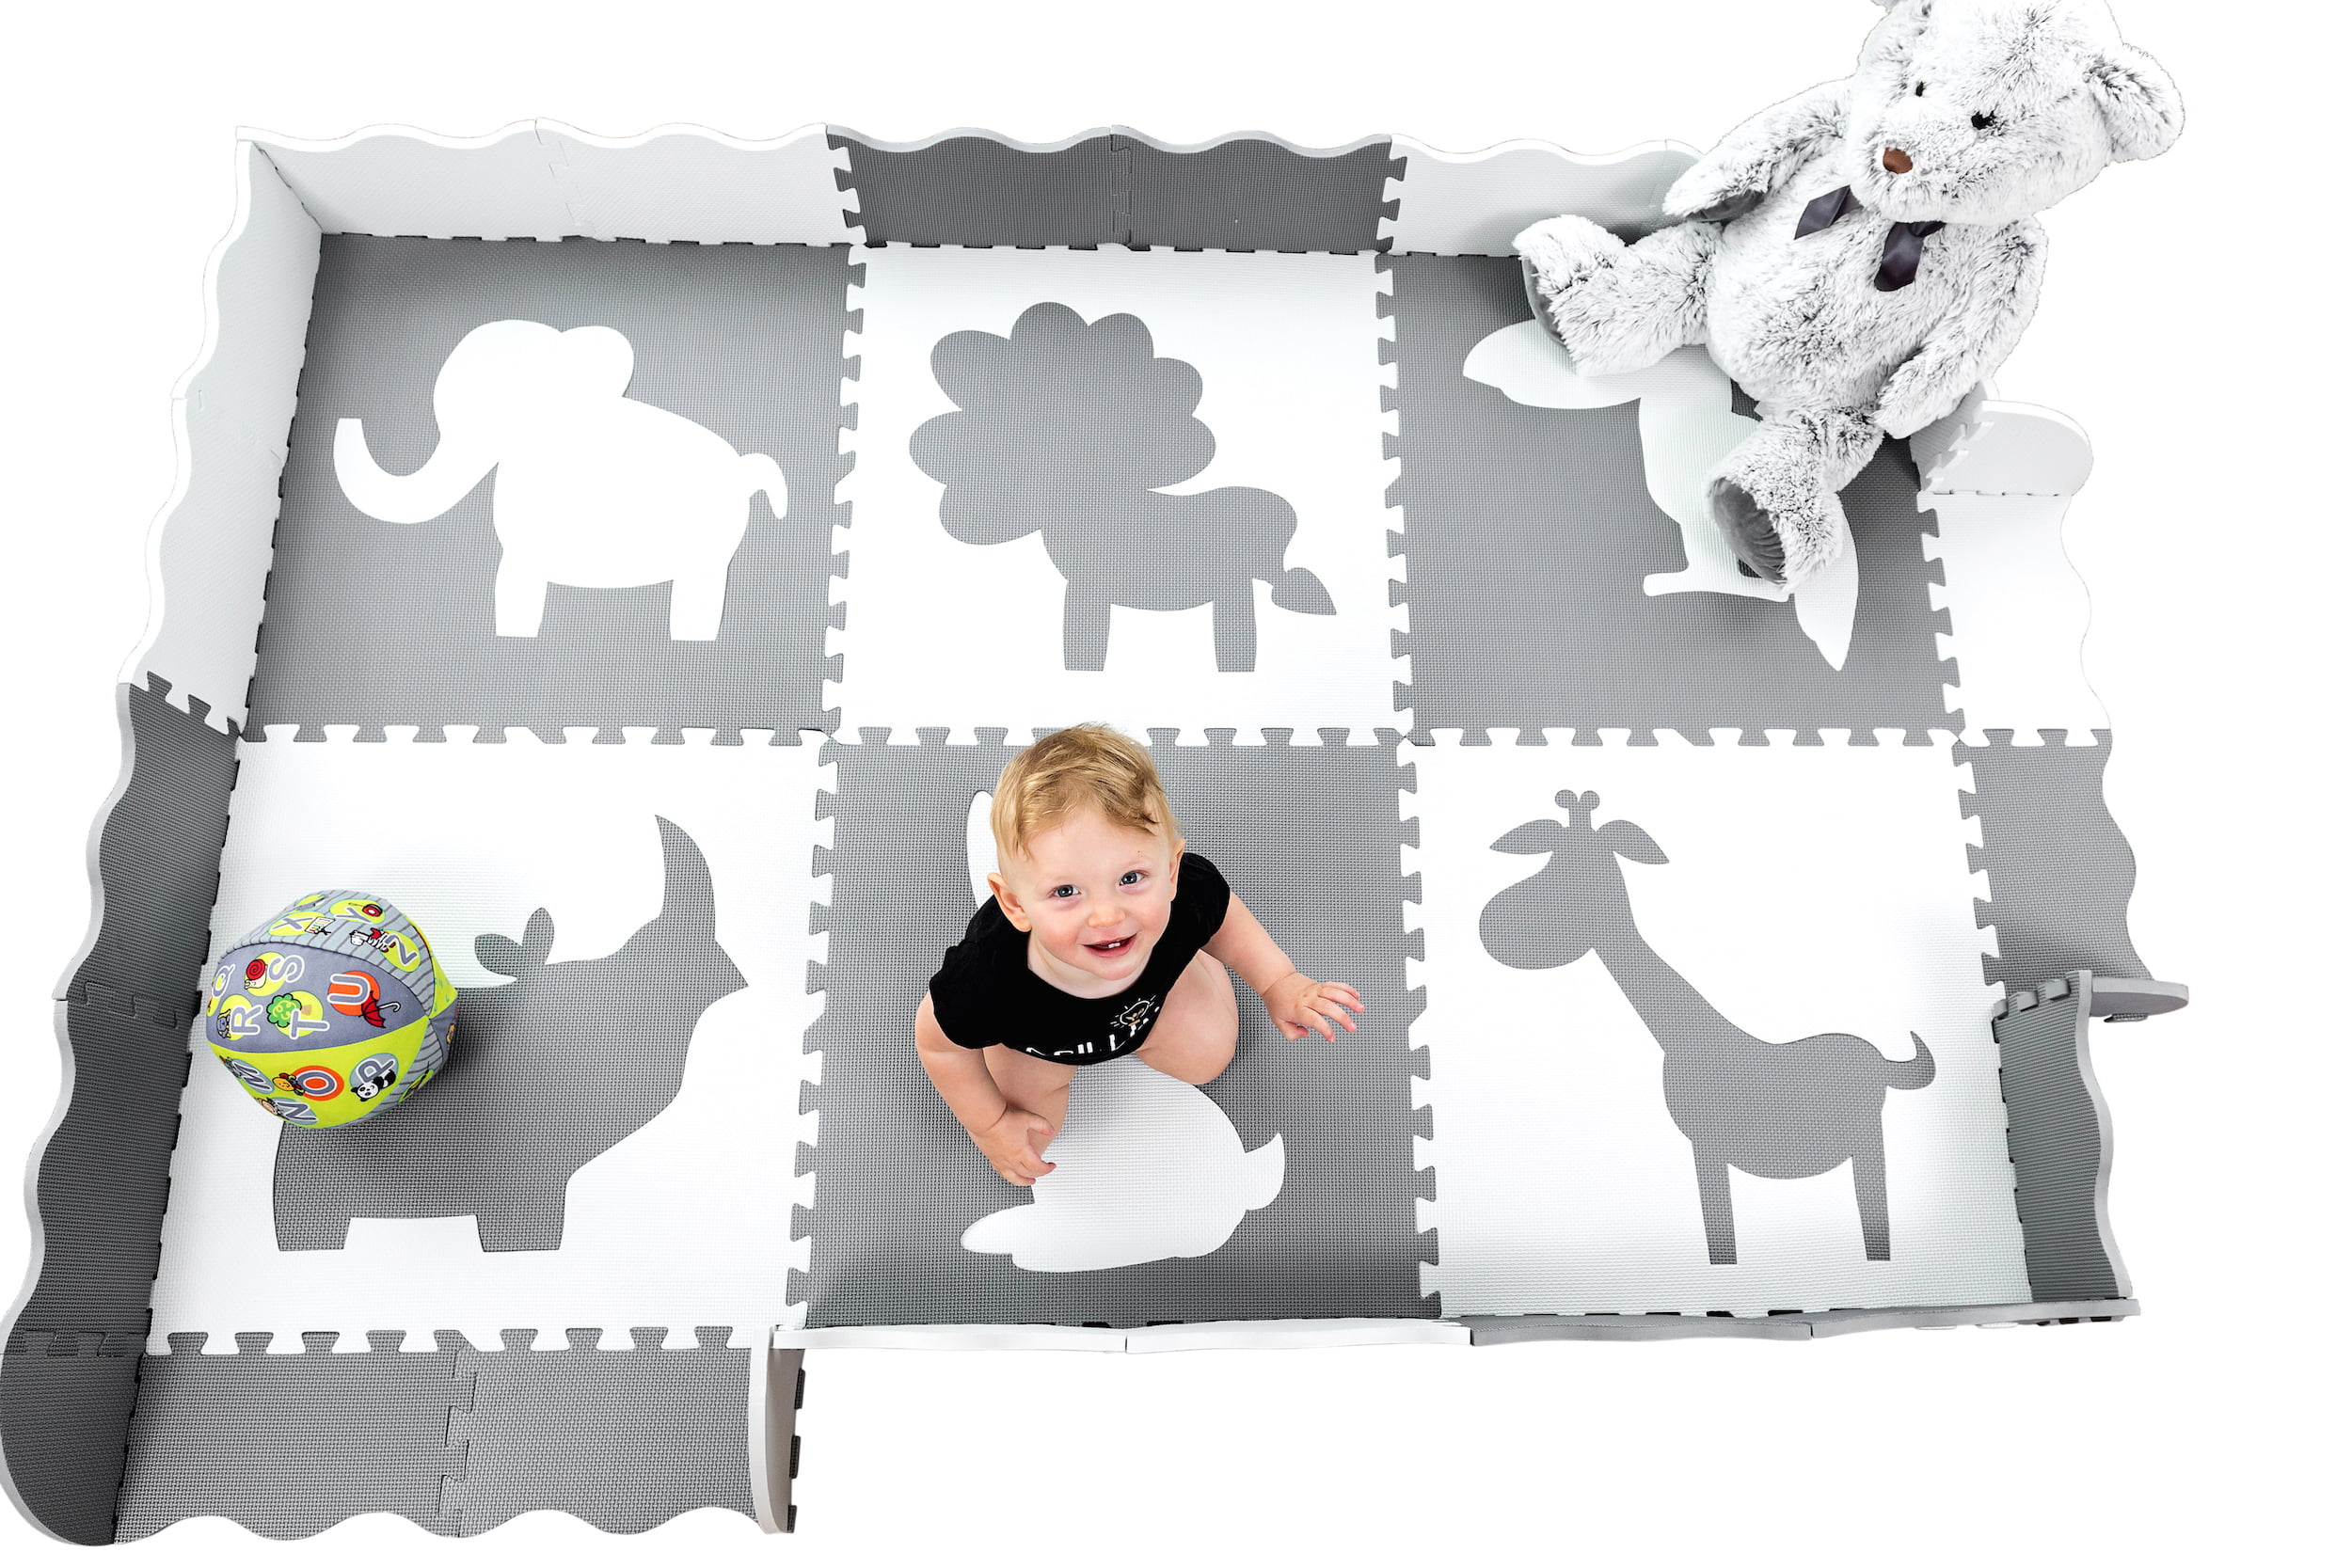 Activities Mat for Baby Playmat Thick 25mm Floor Noise Mat 30x30cm